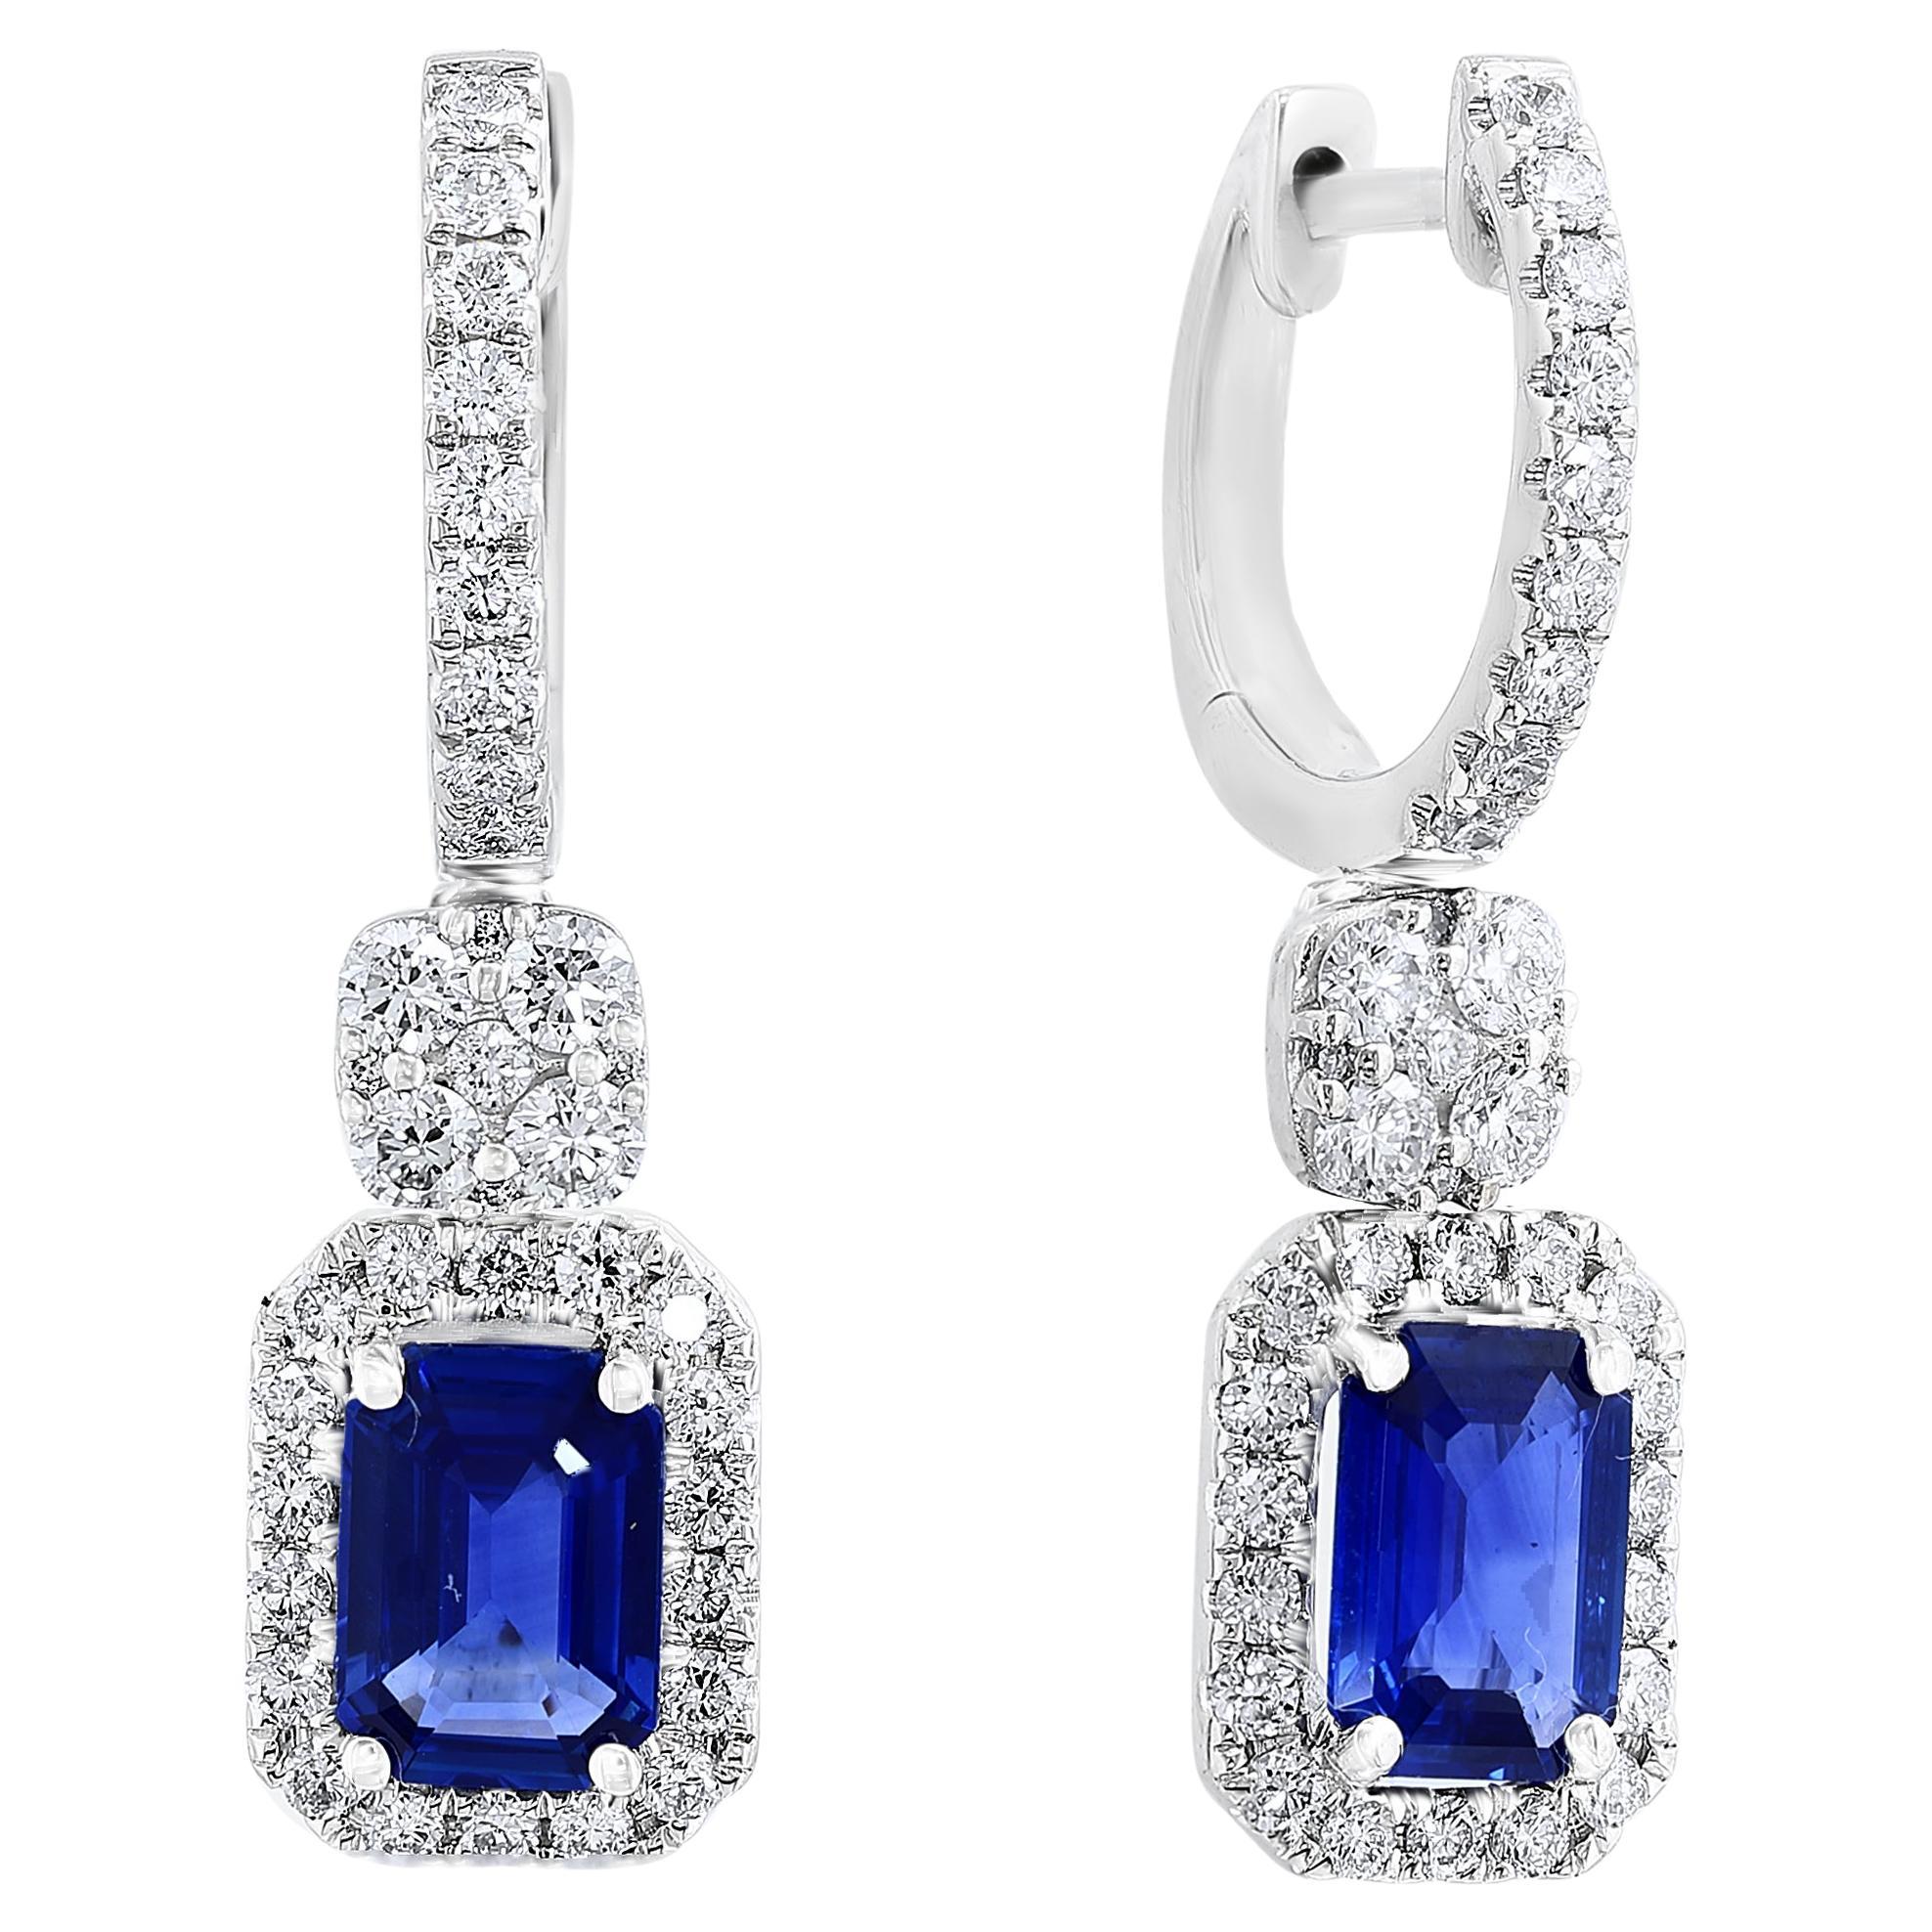 1.88 Carat Emerald Cut Sapphire and Diamond Dangle Earrings in 18K White Gold